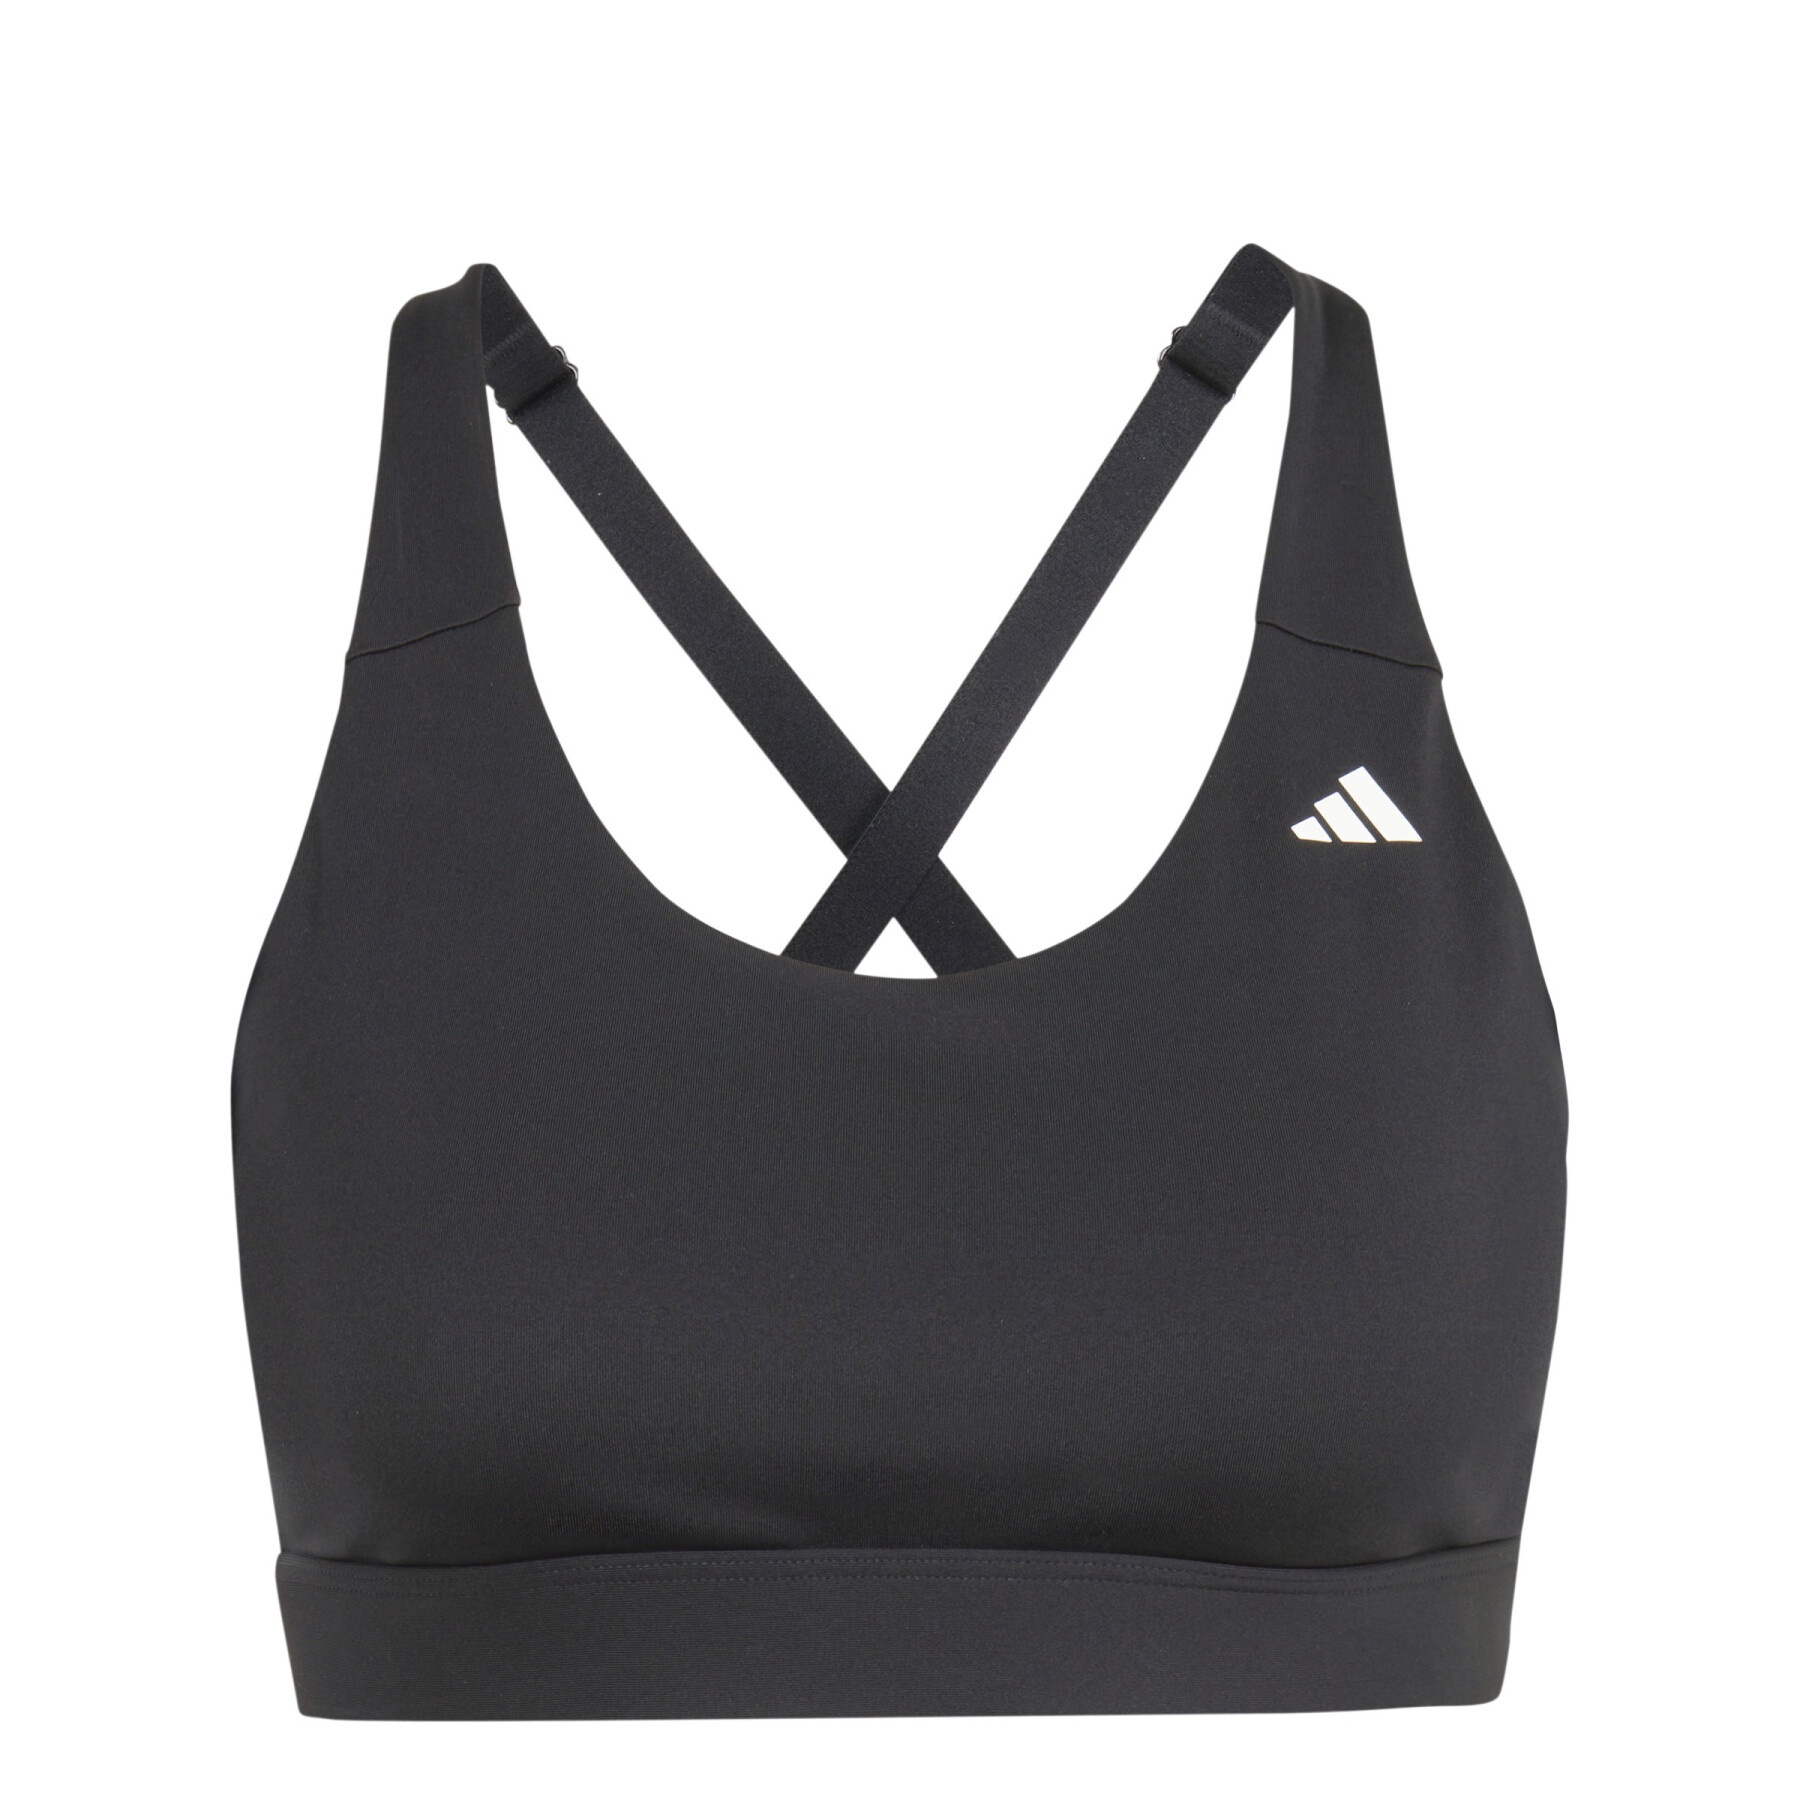 Medium support bra for women adidas Ultimatea Run - Bras - Women's clothing  - Fitness